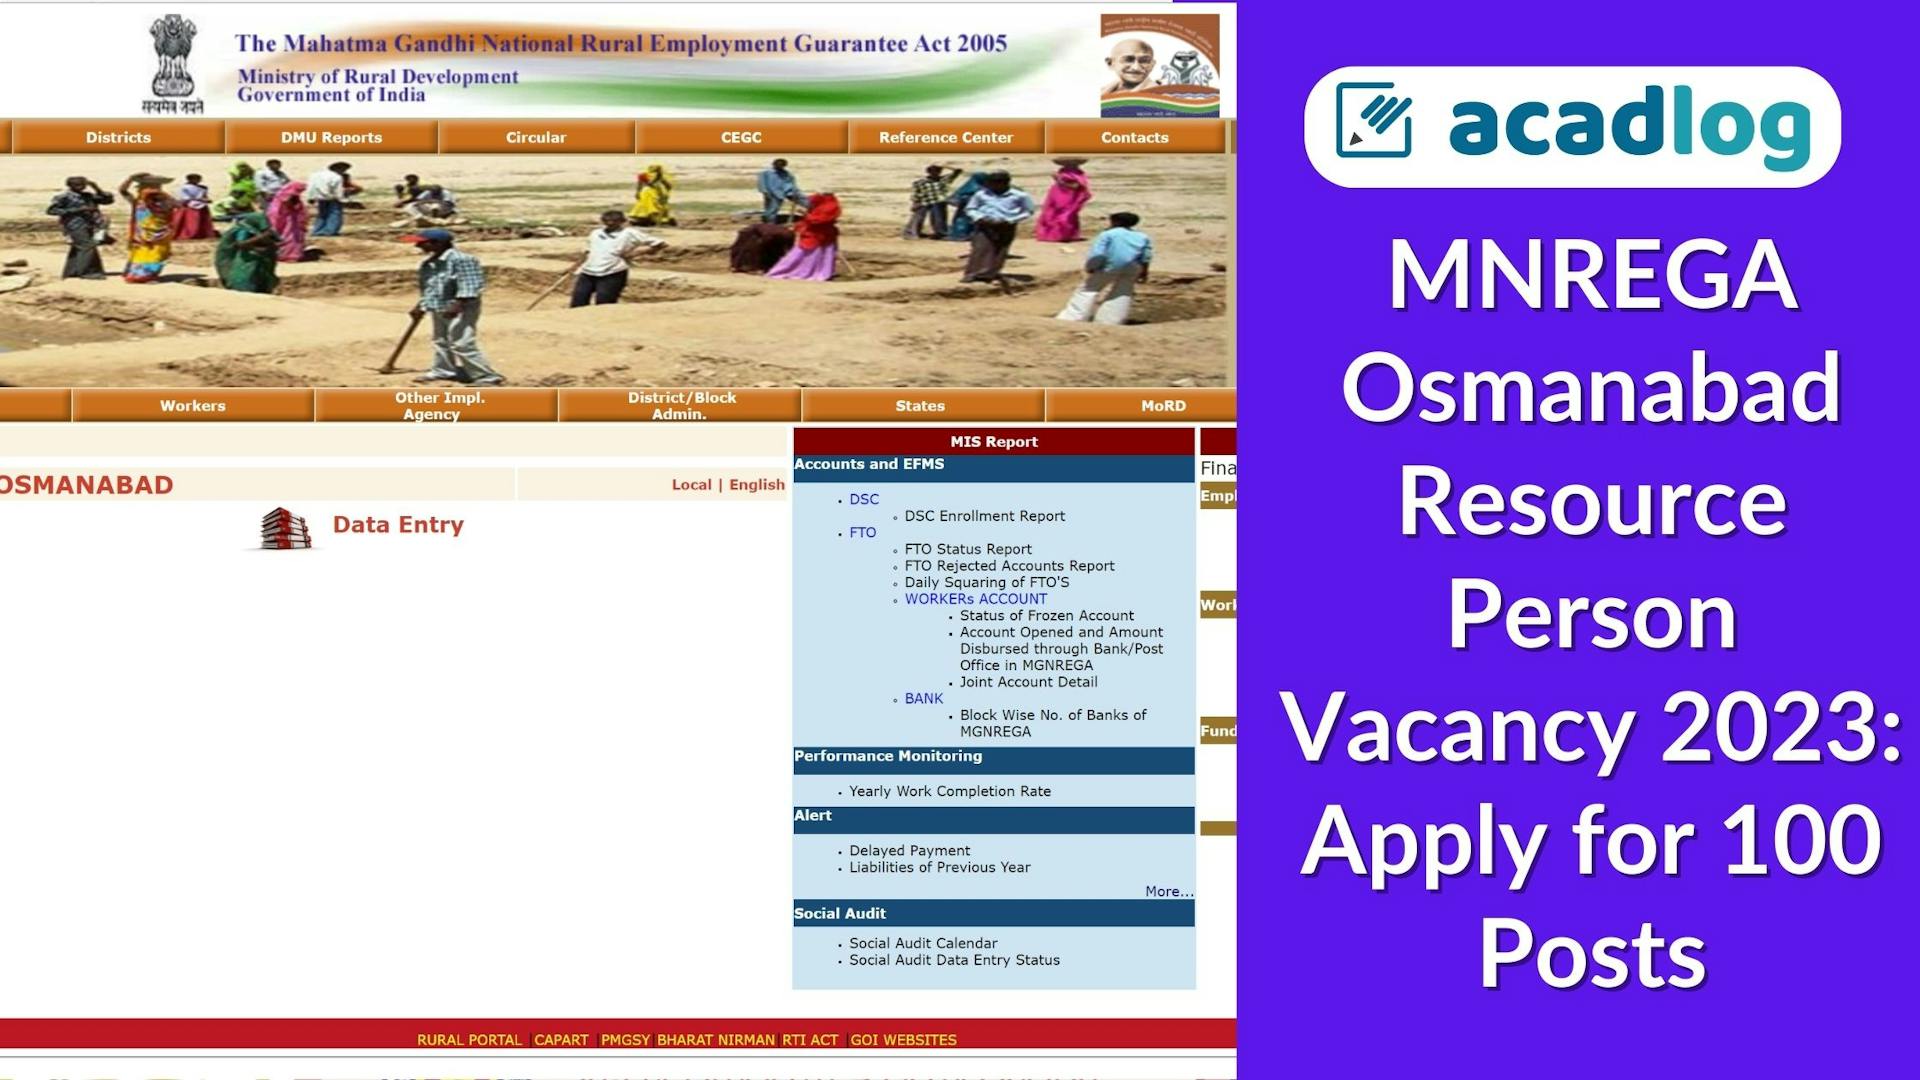 MNREGA Osmanabad Resource Person Vacancy 2023: Apply for 100 Posts